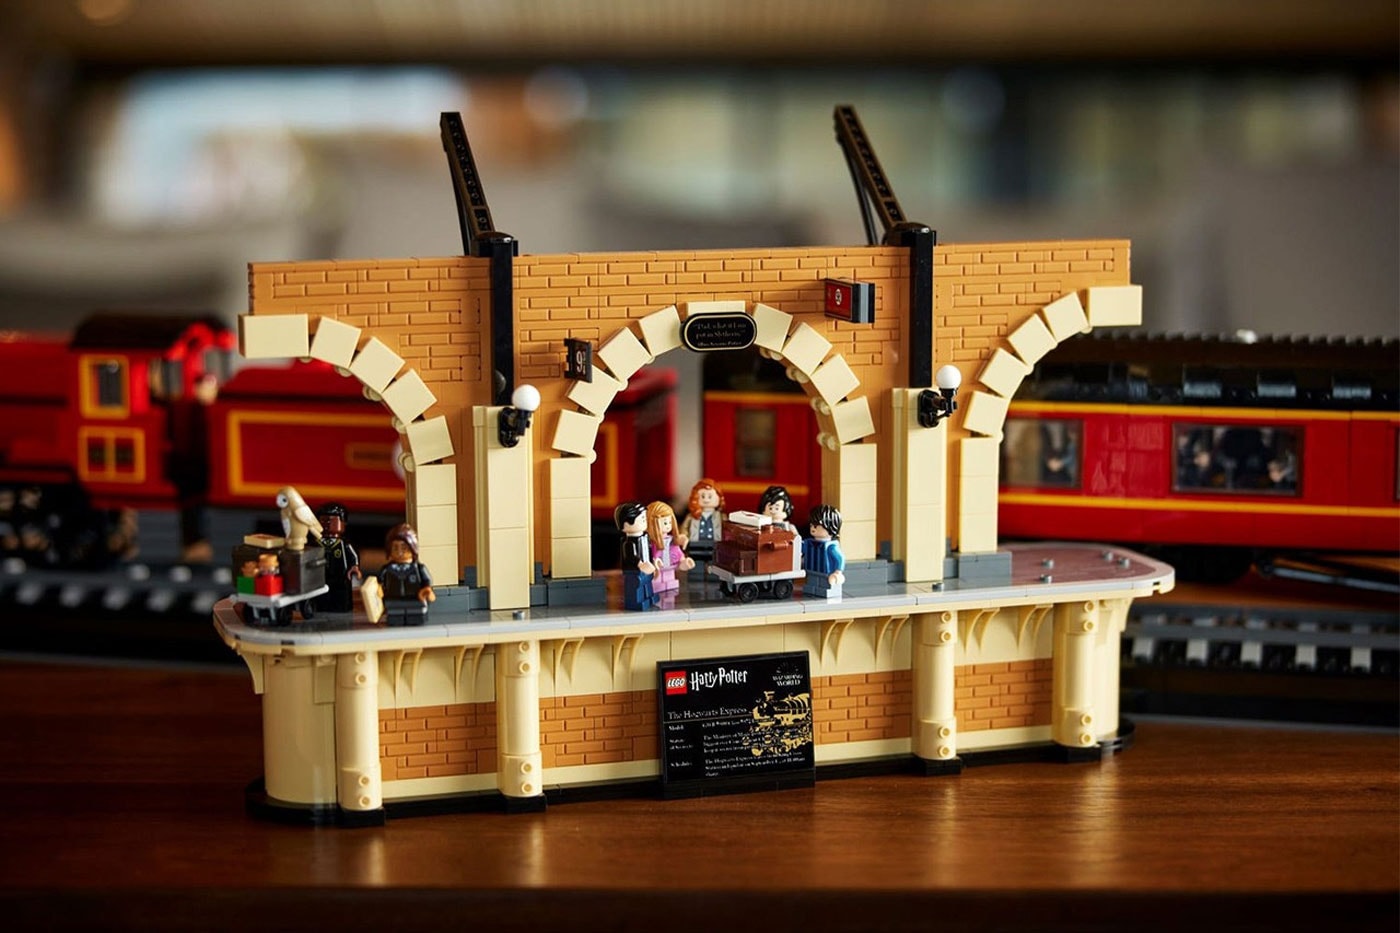 LEGO 正式發佈《Harry Potter》霍格華茲特快列車 Hogwarts Express 積木套組